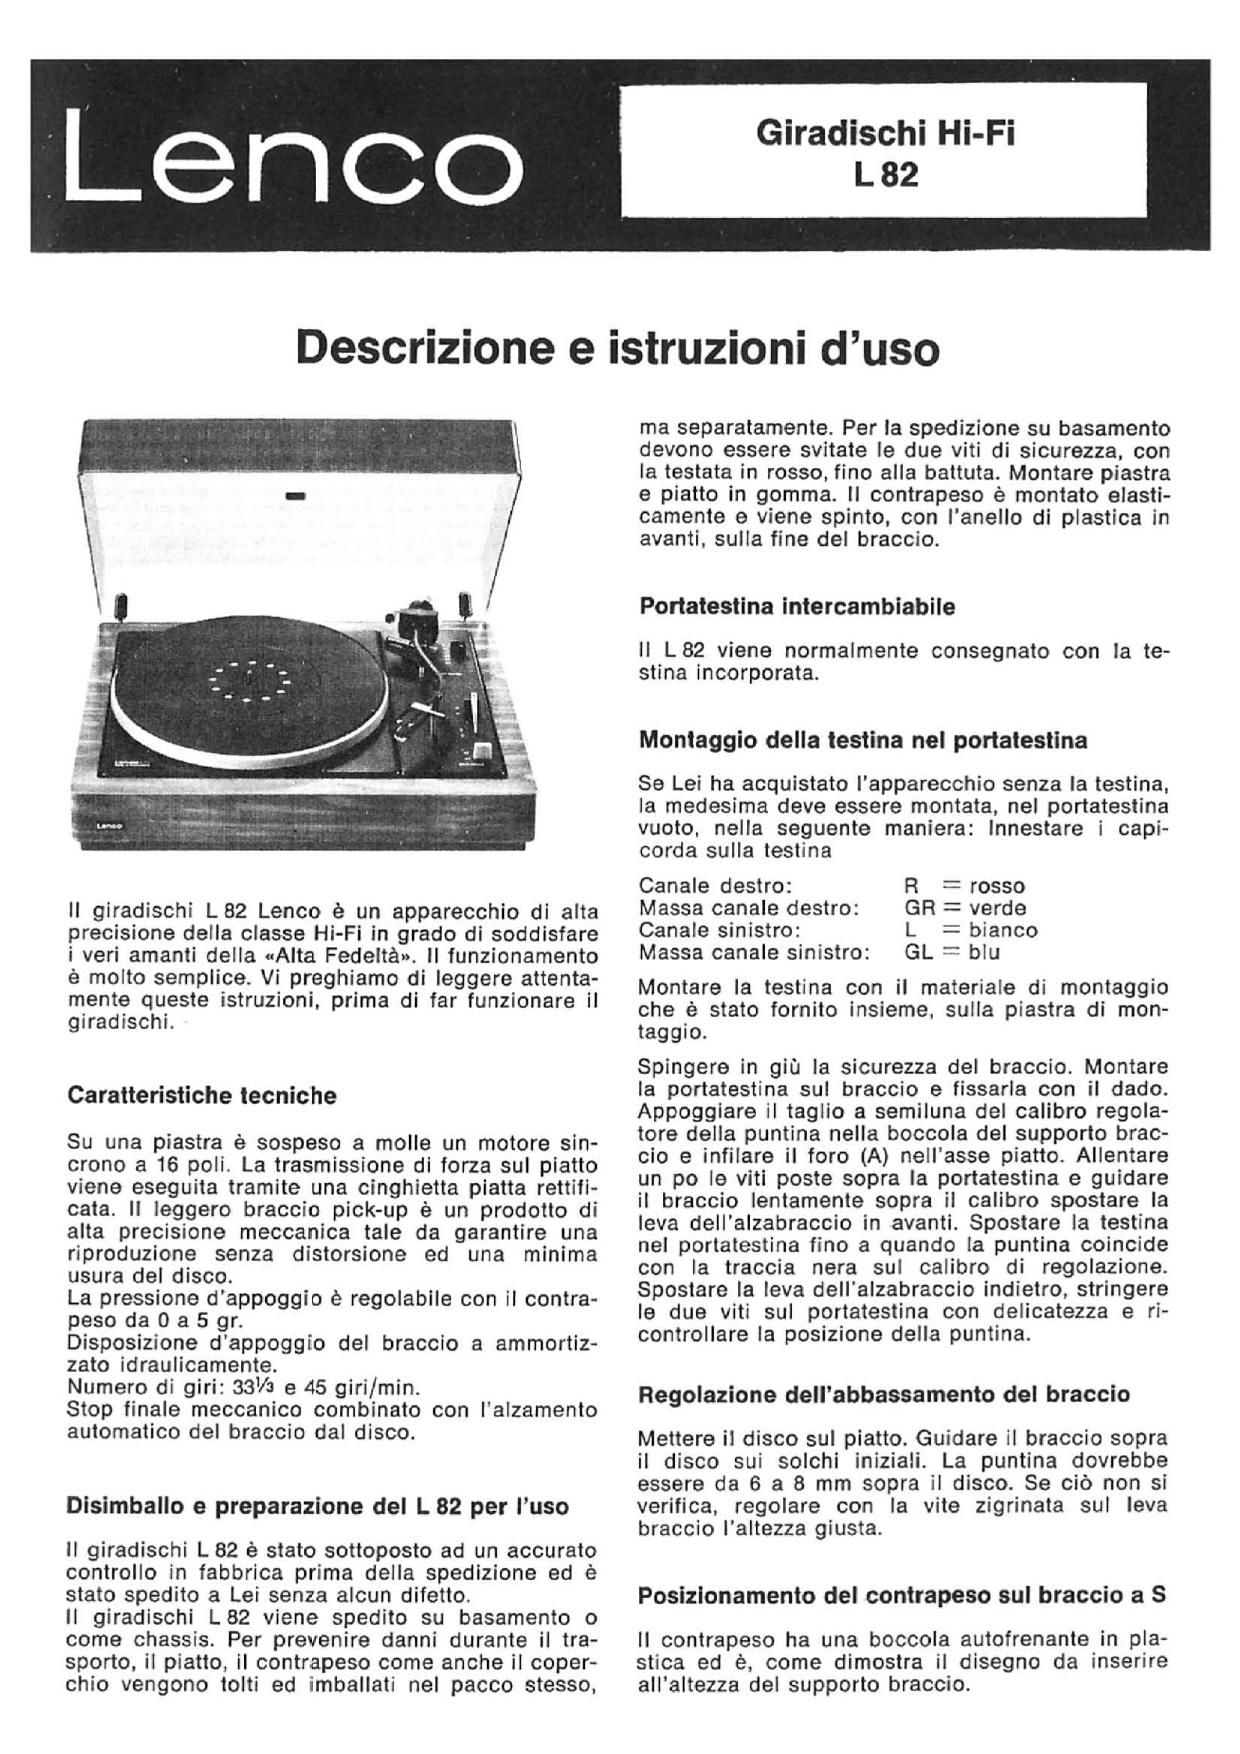 Lenco L82 Owners Manual it